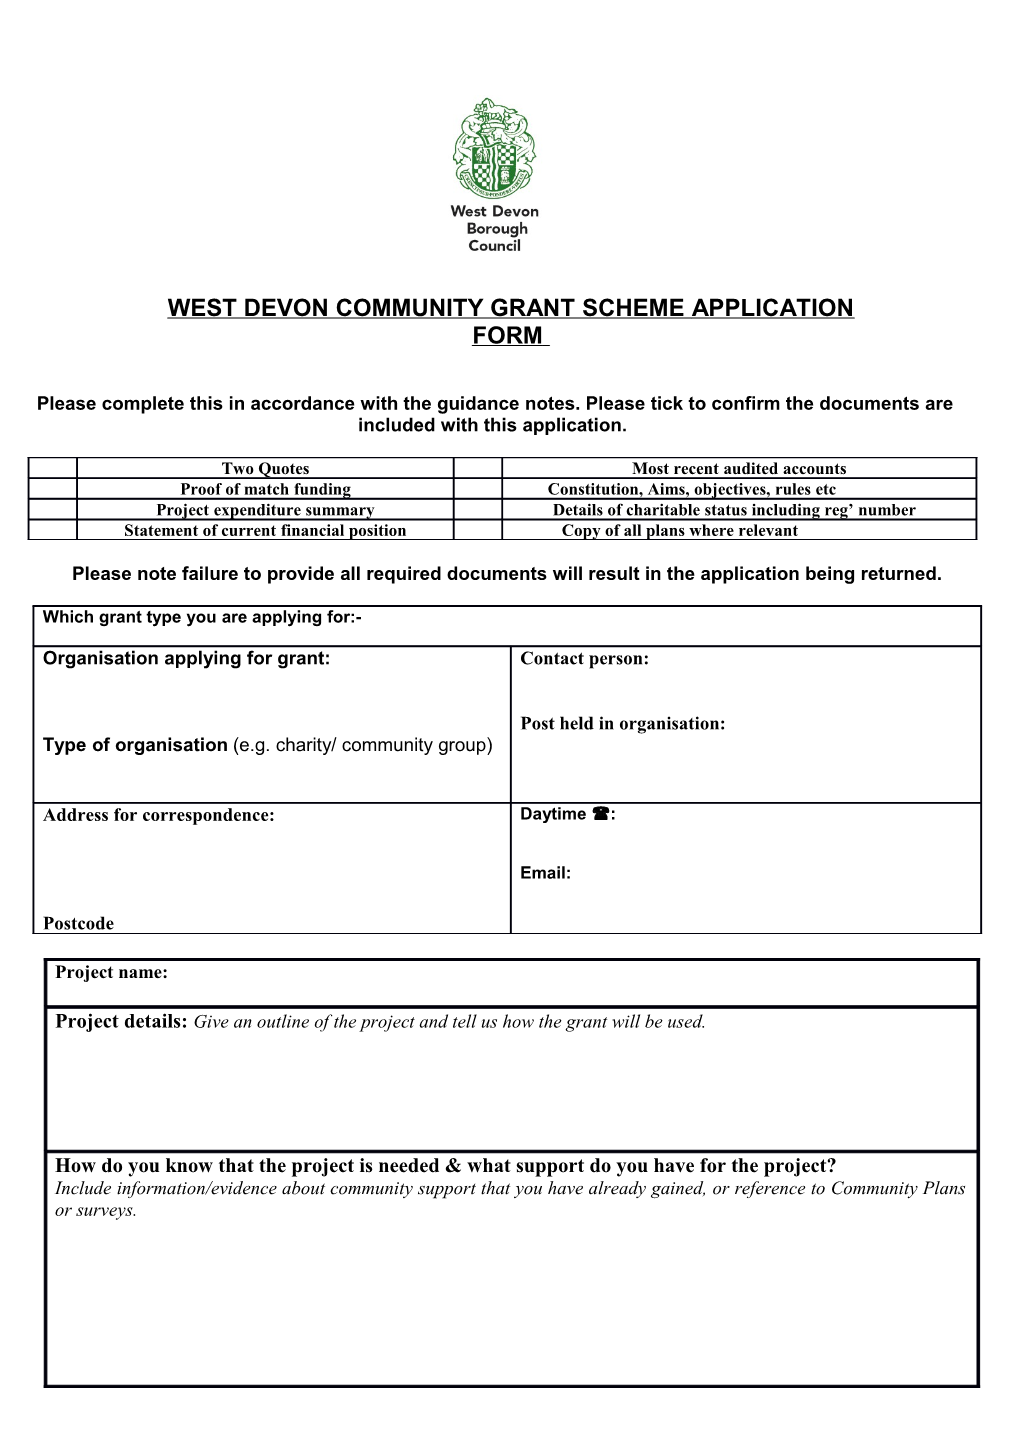 West Devon Community Grant Scheme Application Form